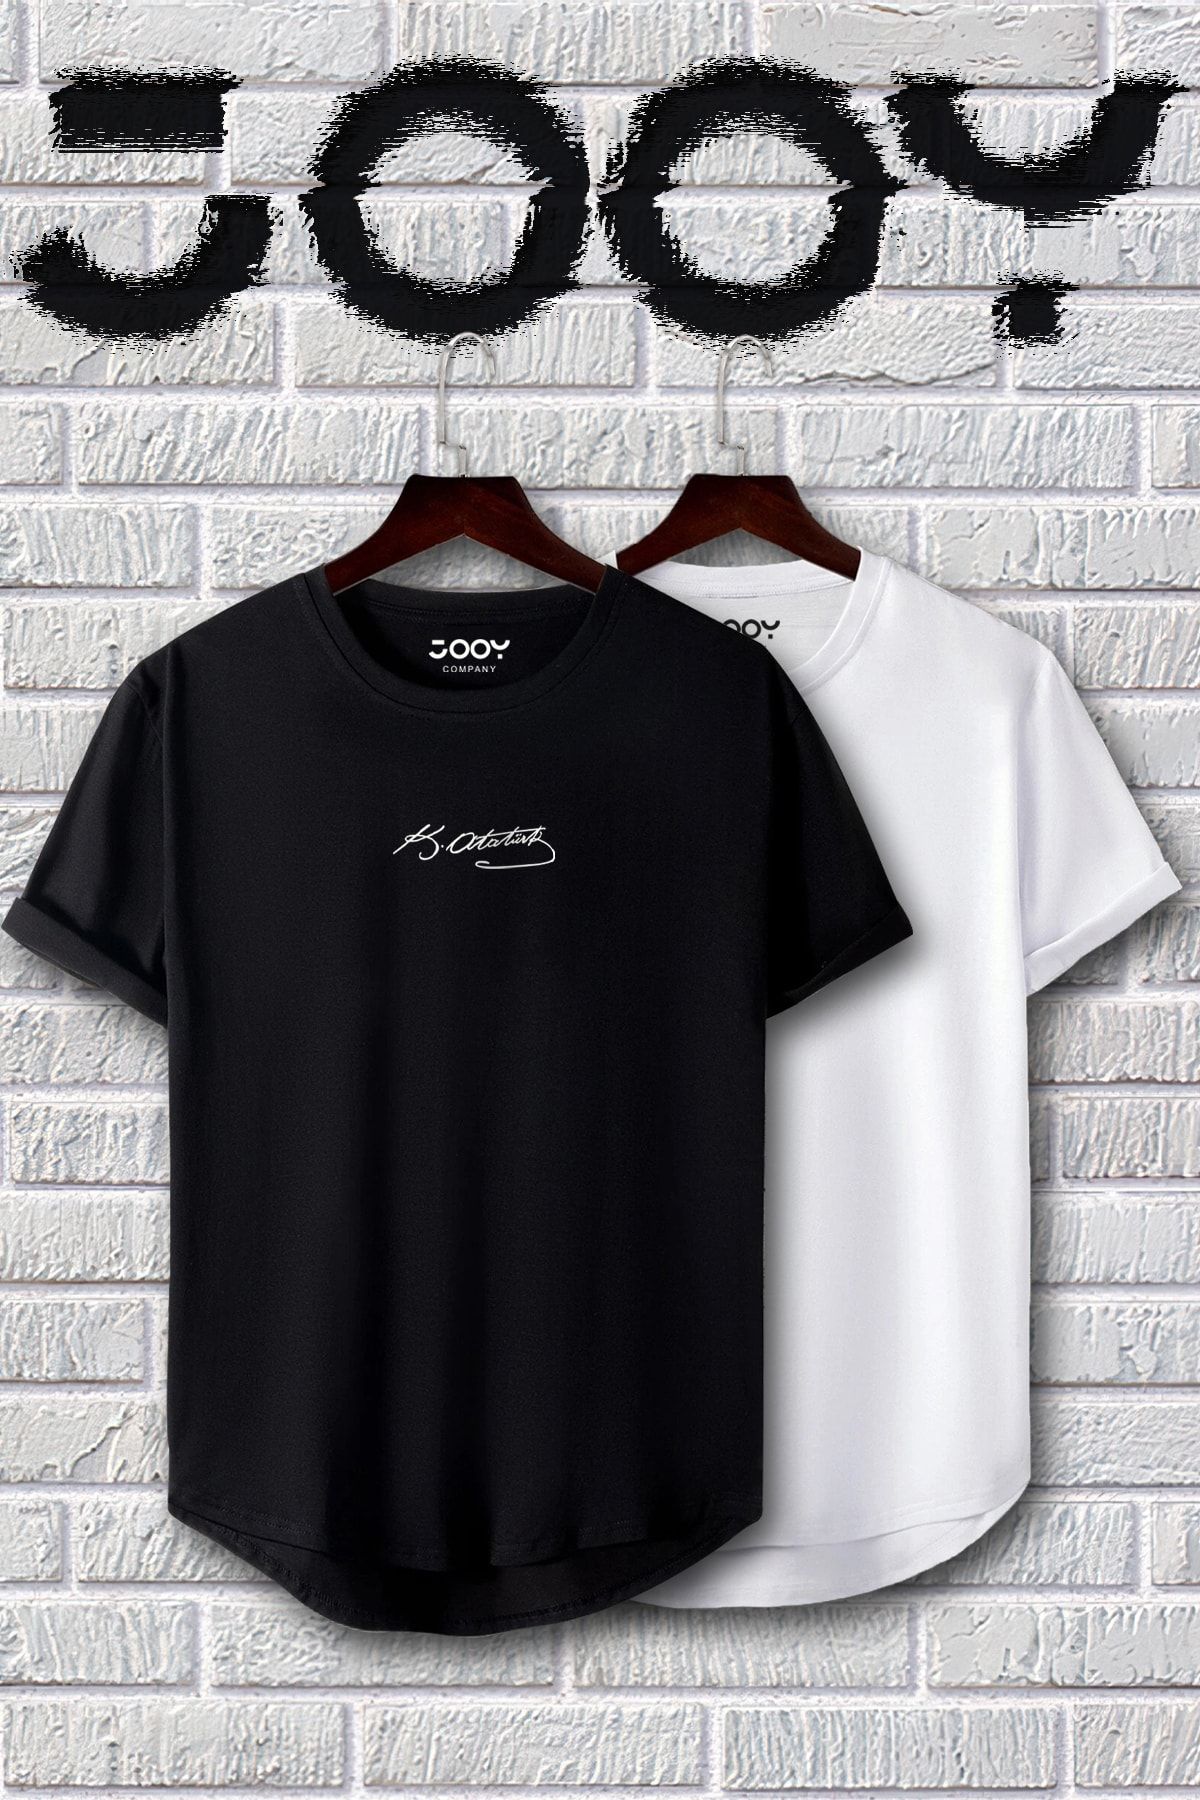 Jooy Company Atatürk Imza Baskılı Siyah Beyaz Oval Kesim Tshirt 2'li Set